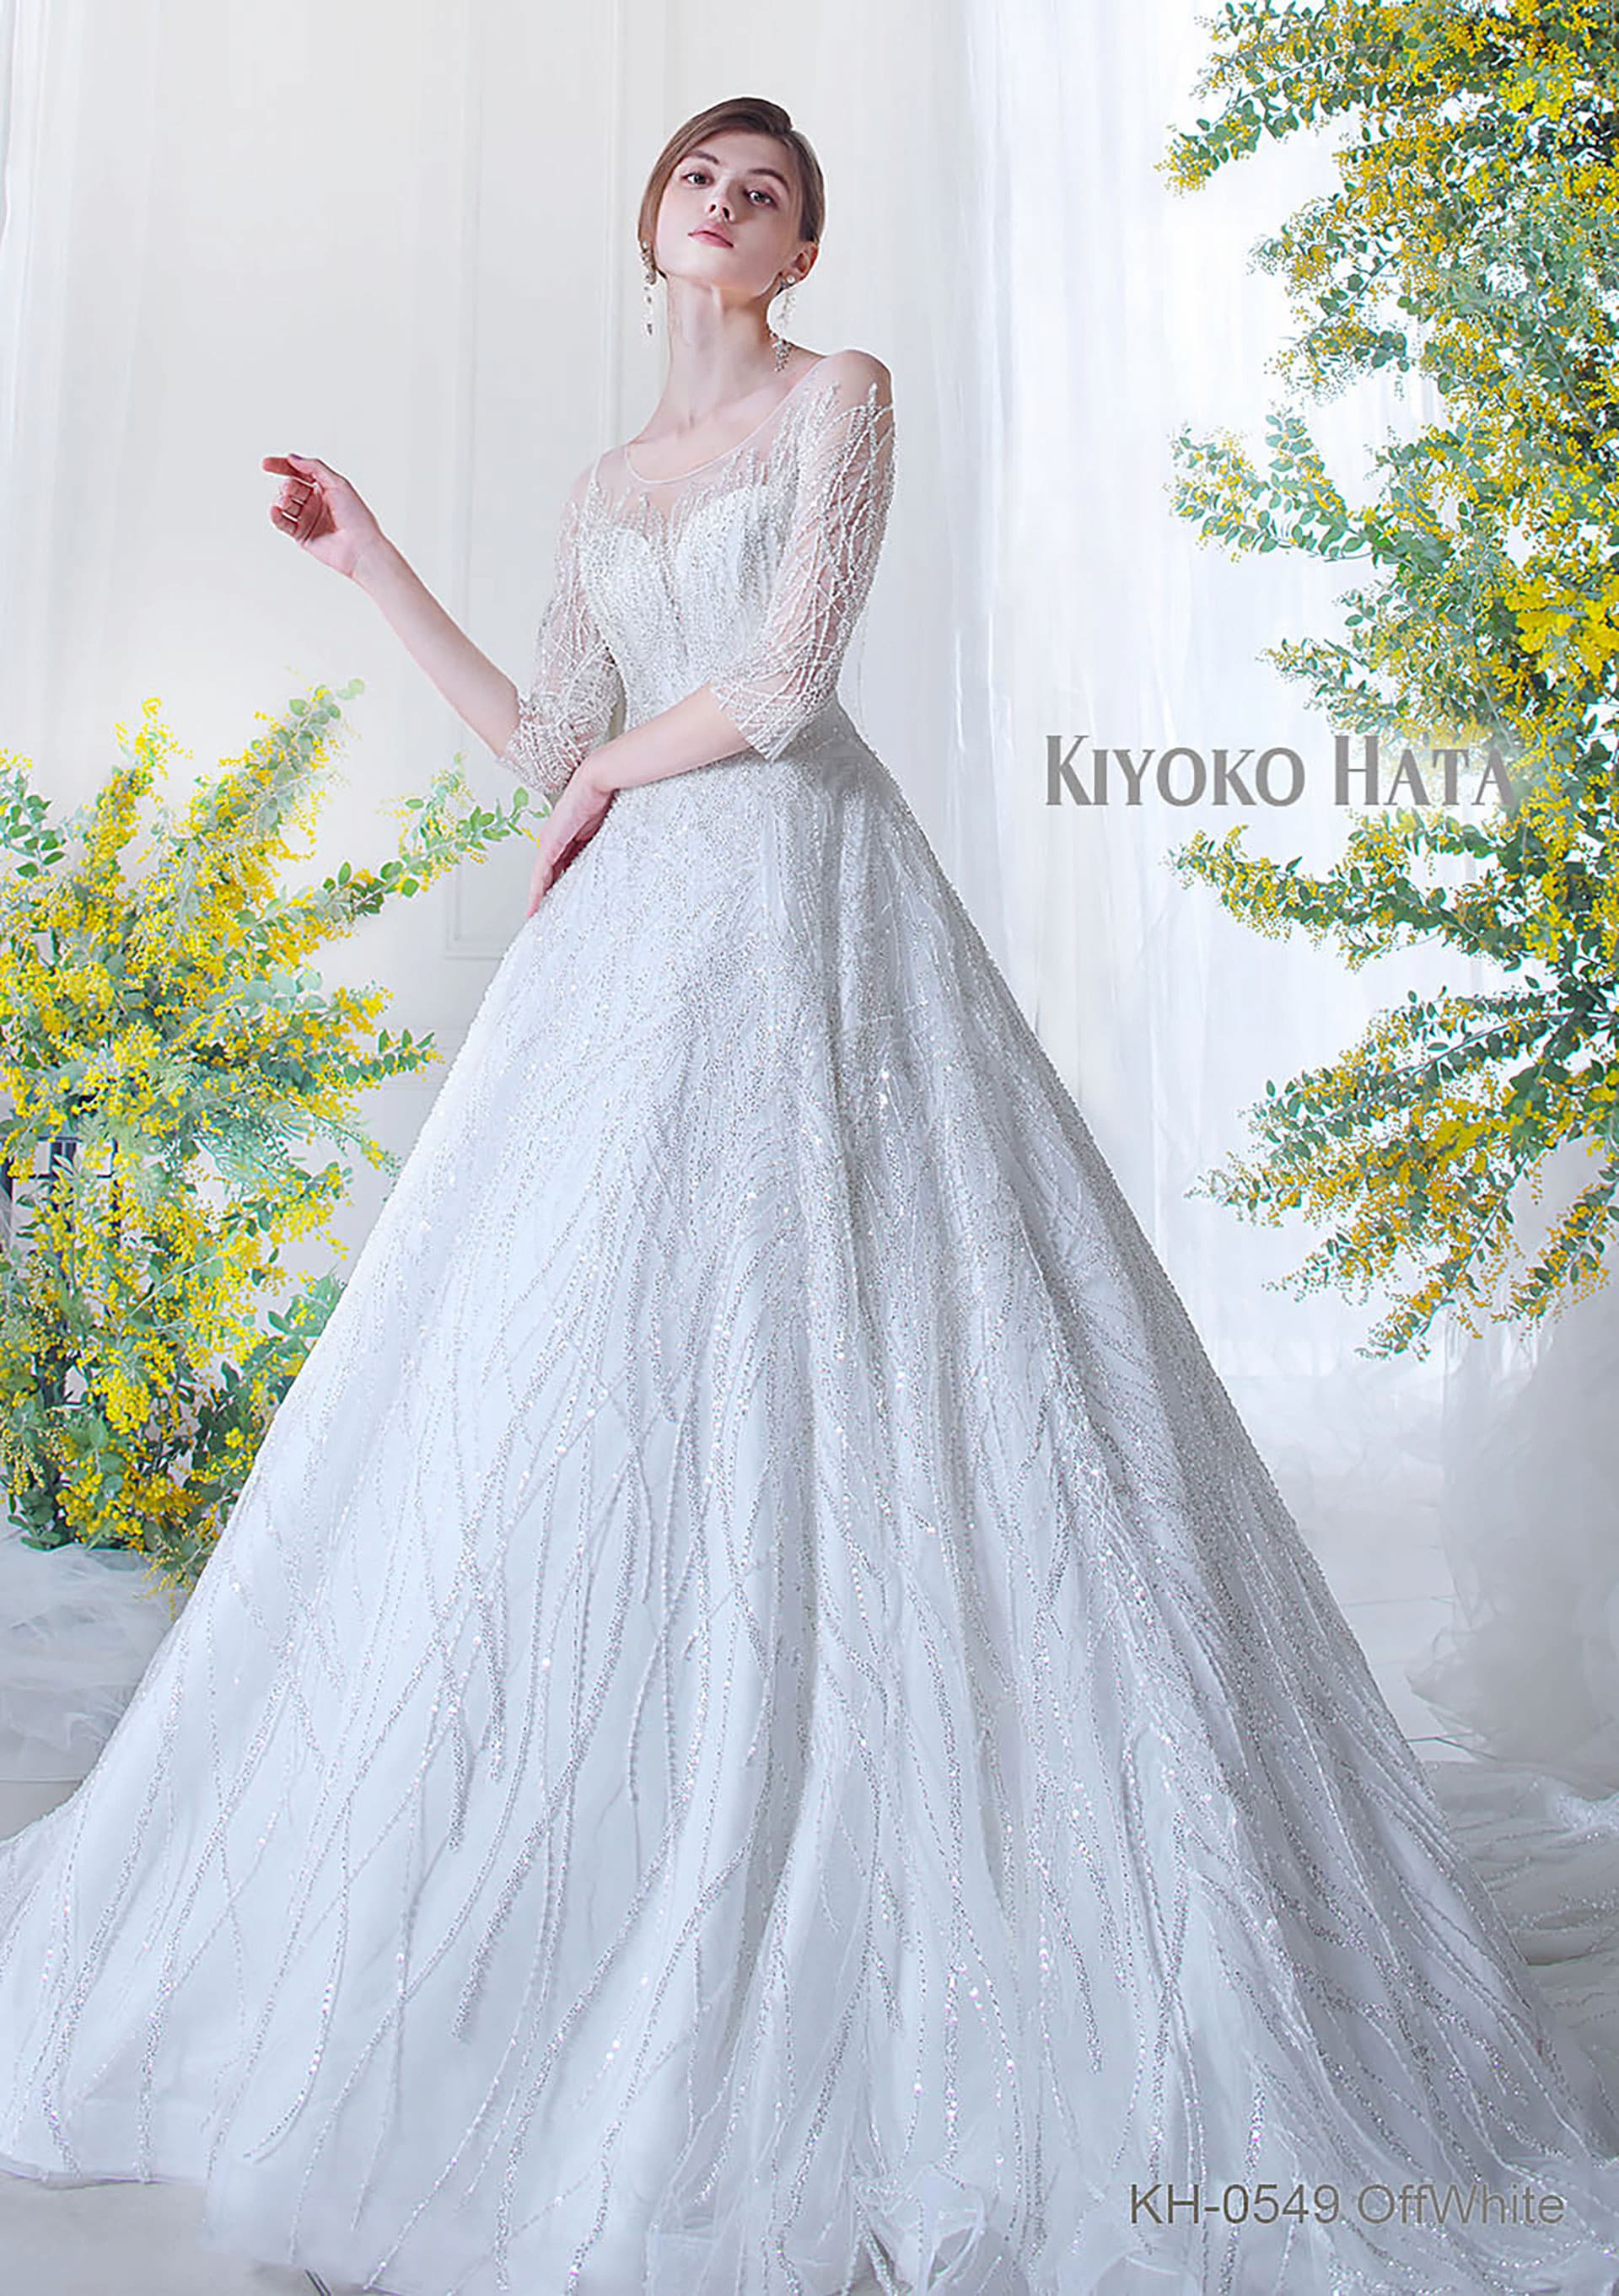 WEDDING DRESS - キヨコハタ | KIYOKO HATA 公式ページ